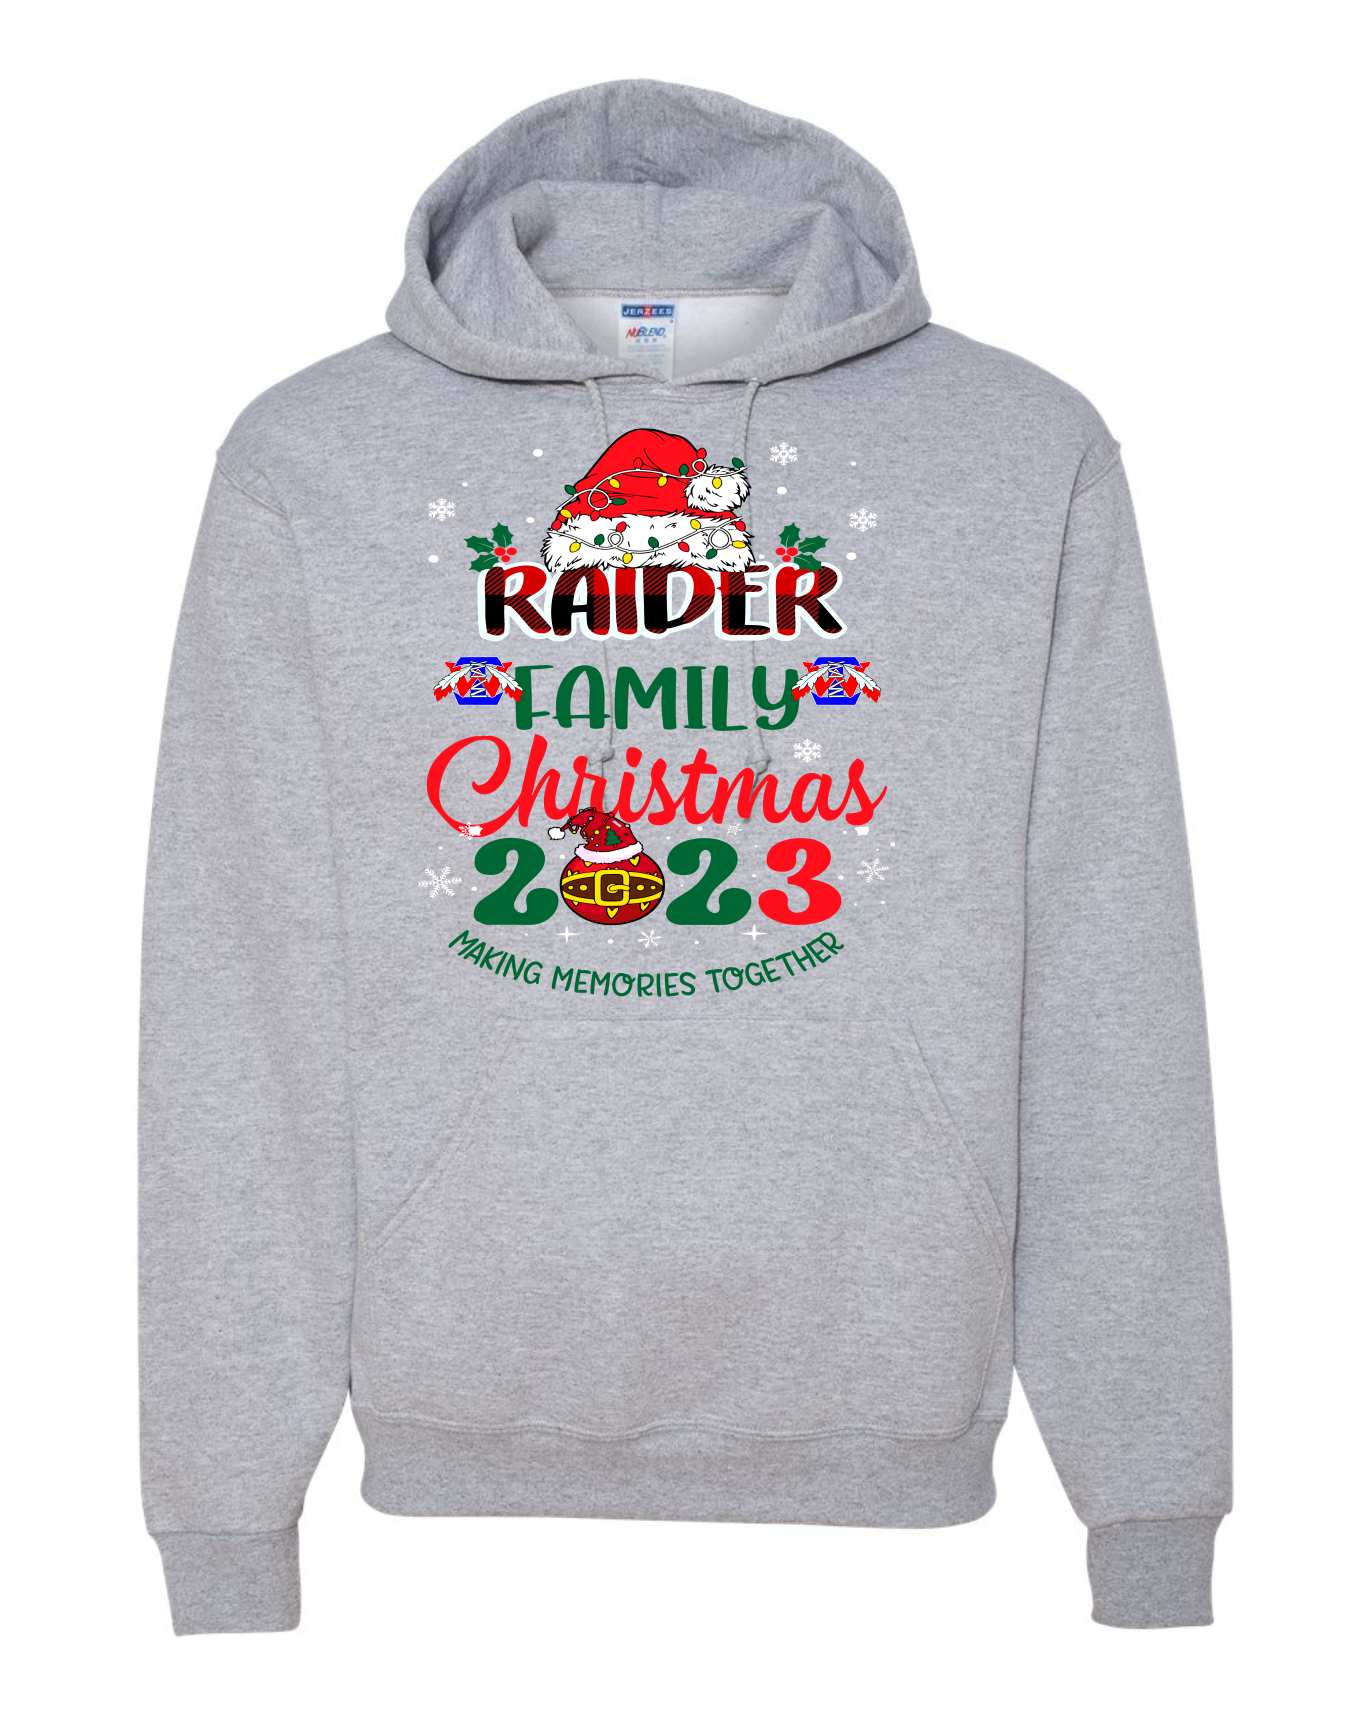 Raider Family Christmas 2023